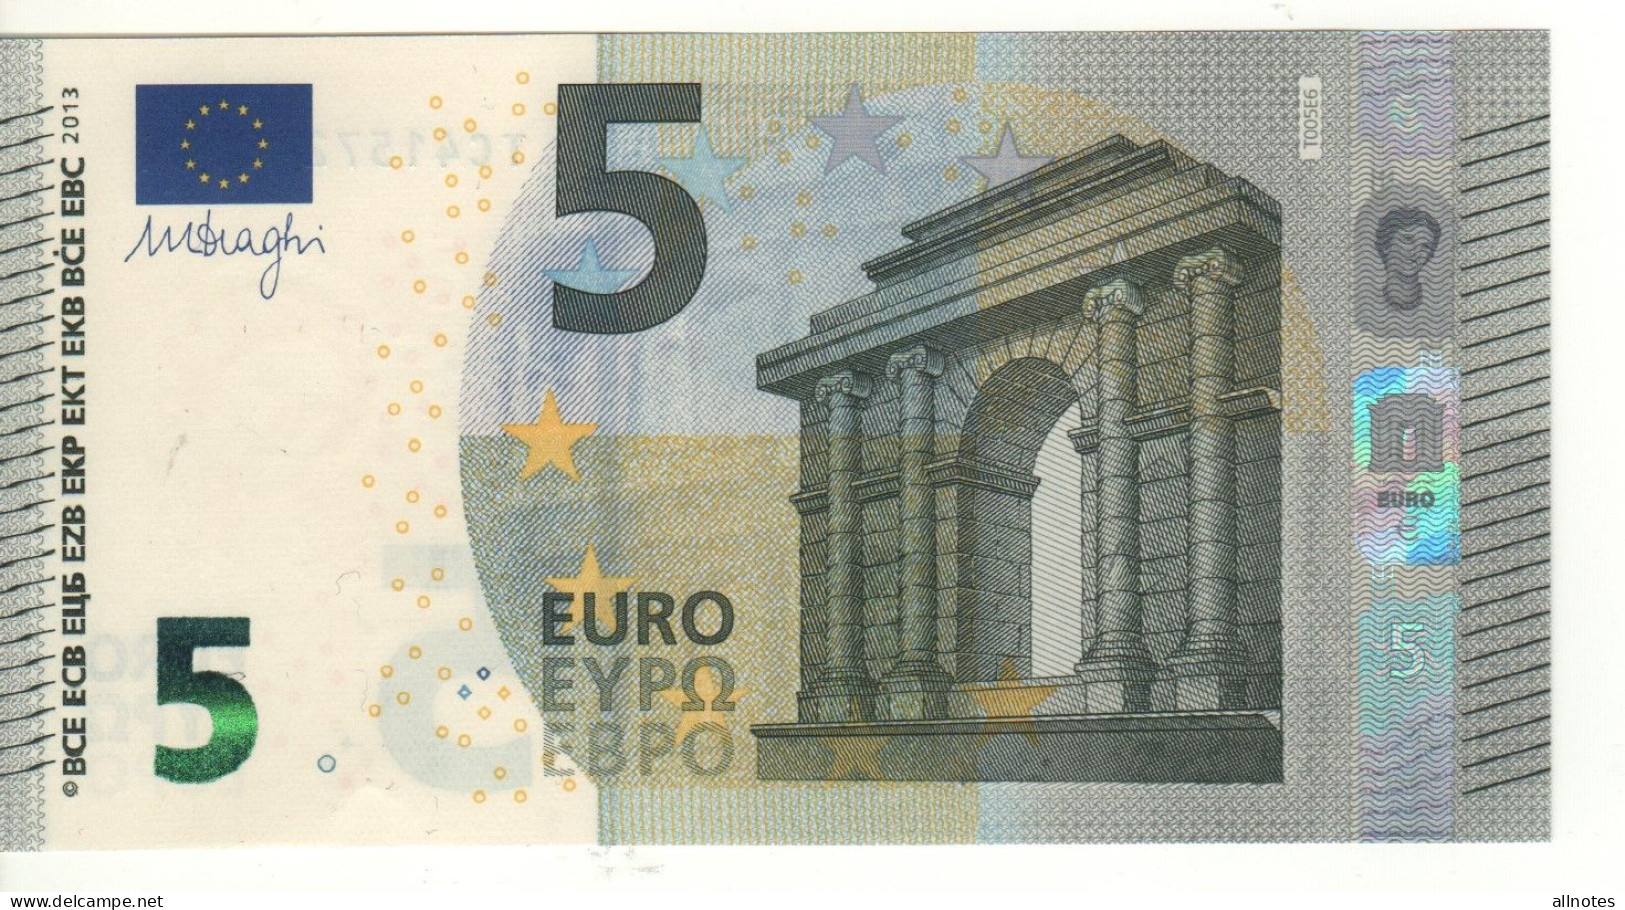 5 EURO  "Ireland"    DRAGHI    T 005 E6    TC4157243984  /  FDS - UNC - 5 Euro